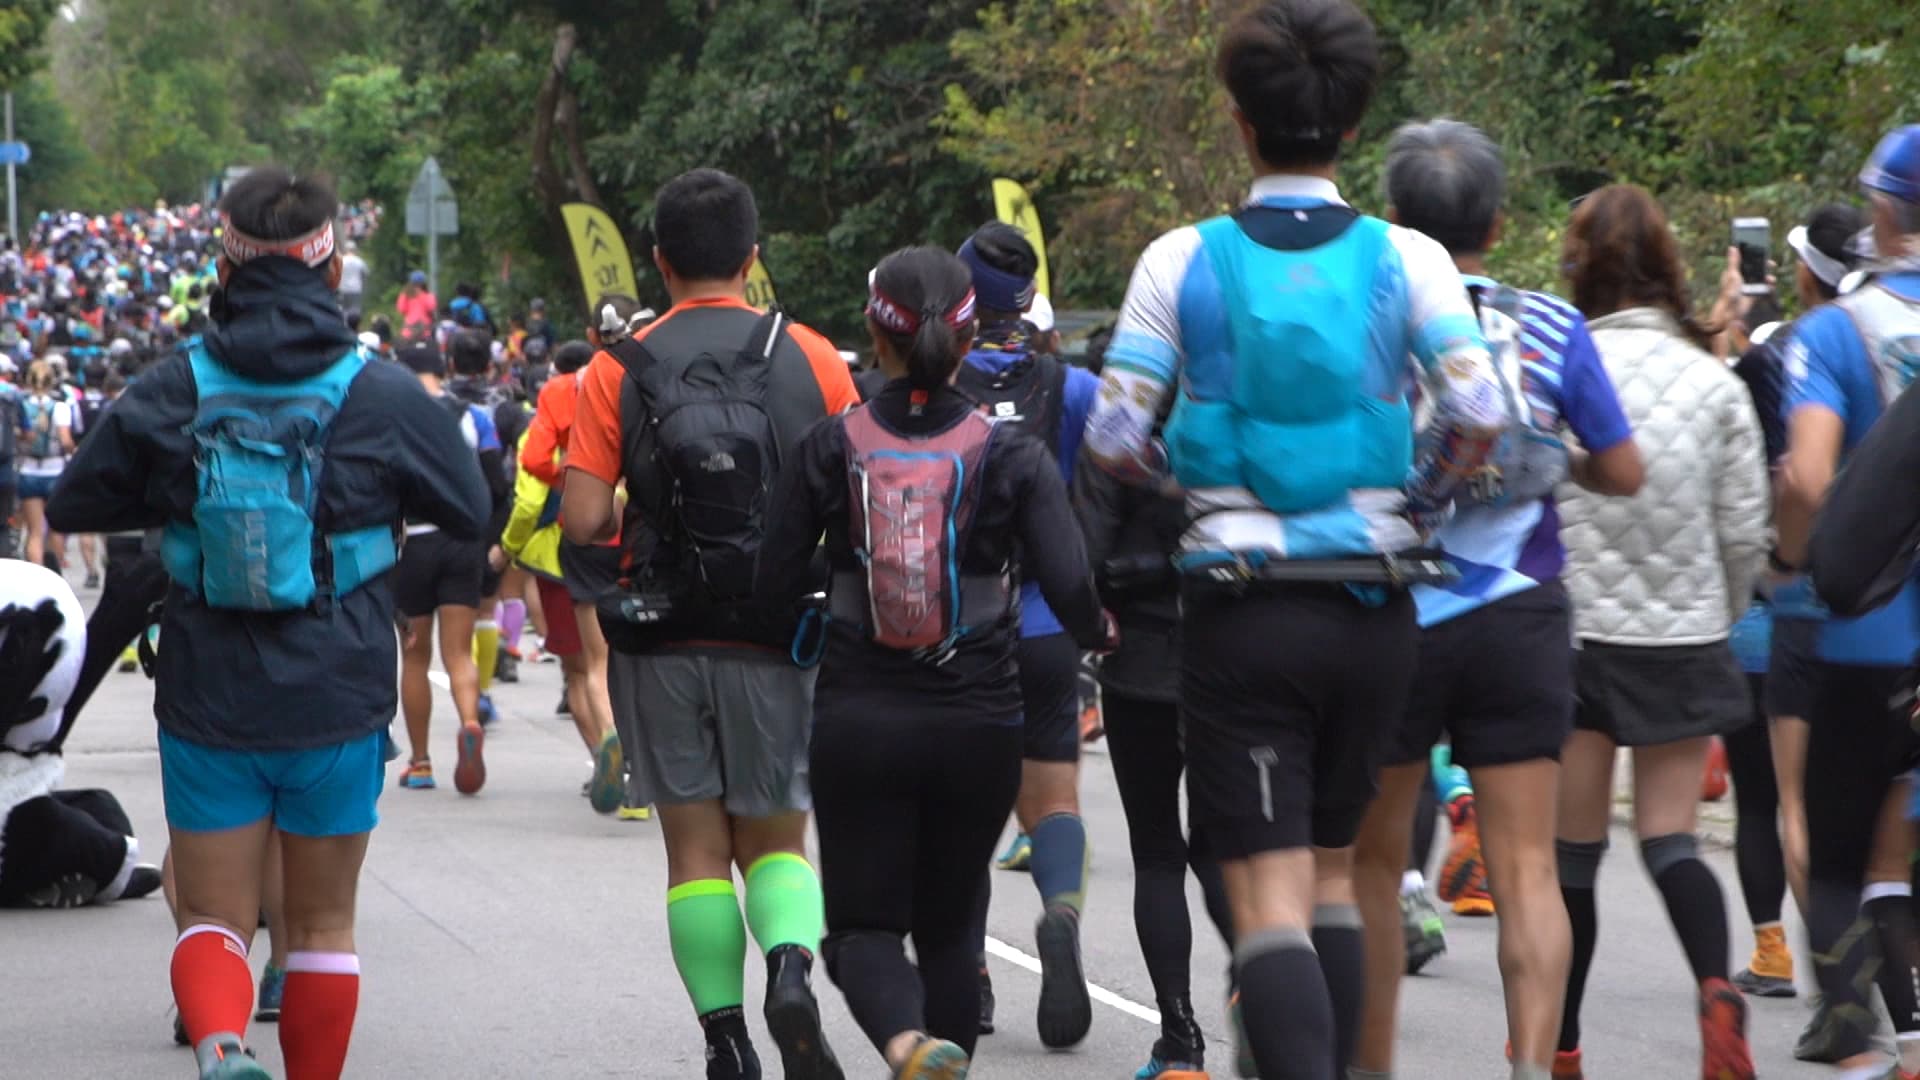 Asia's growing addiction to the ultramarathon